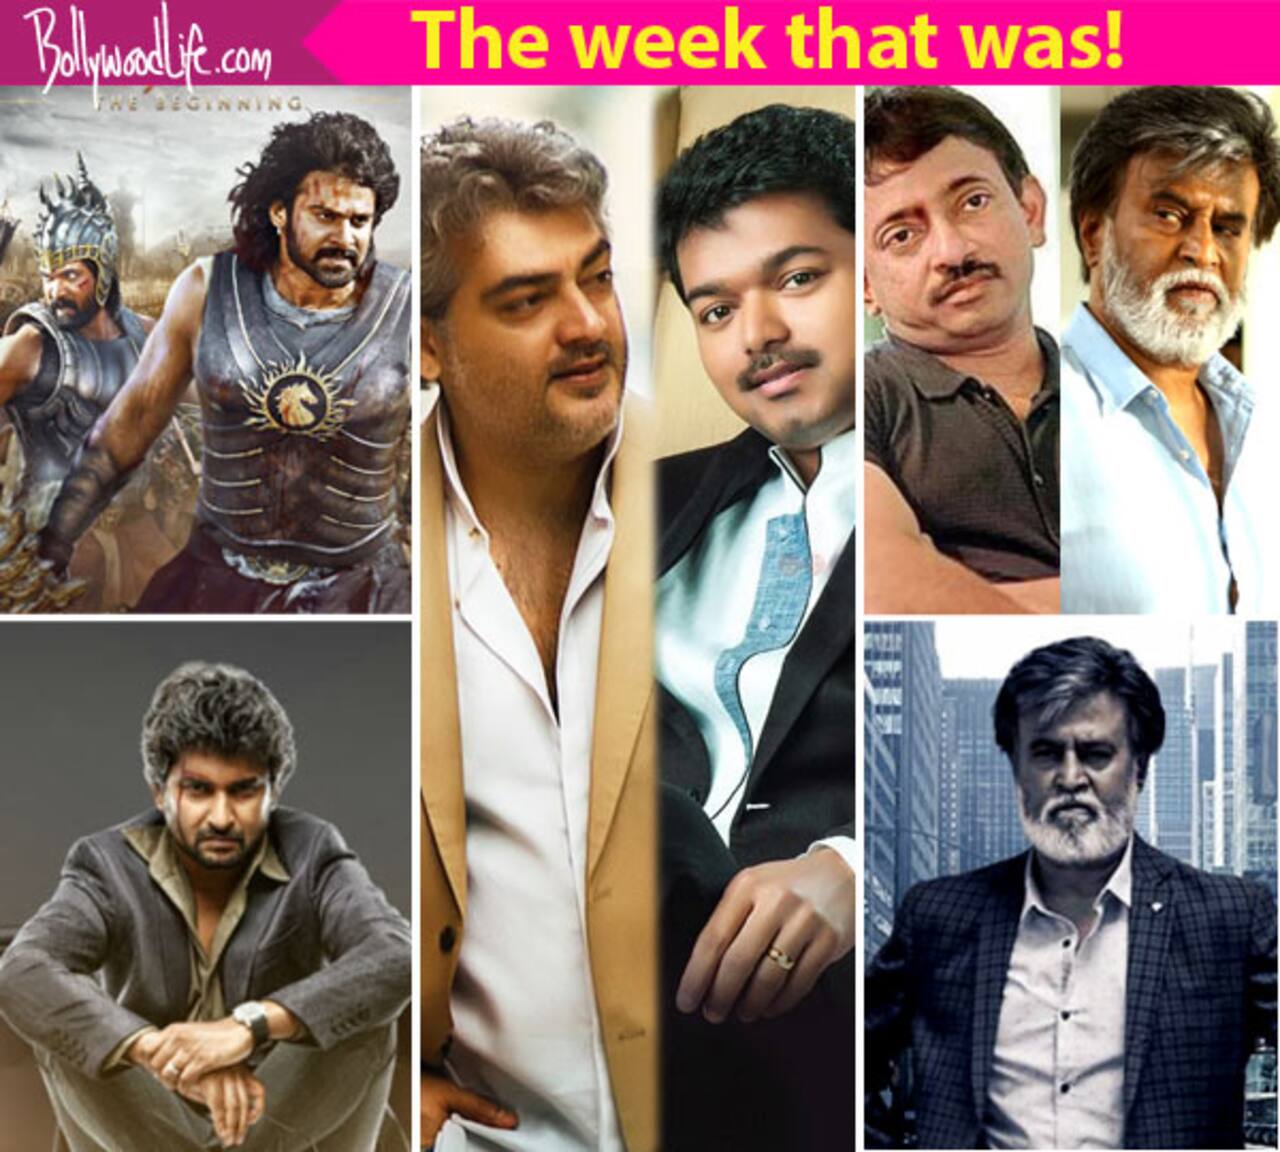 Baahubali sweeping CineMAA awards, Rajinikanth's Kabali teaser release, Twitter war between Vijay and Ajith fans - here are the top 5 newsmakers of the week!